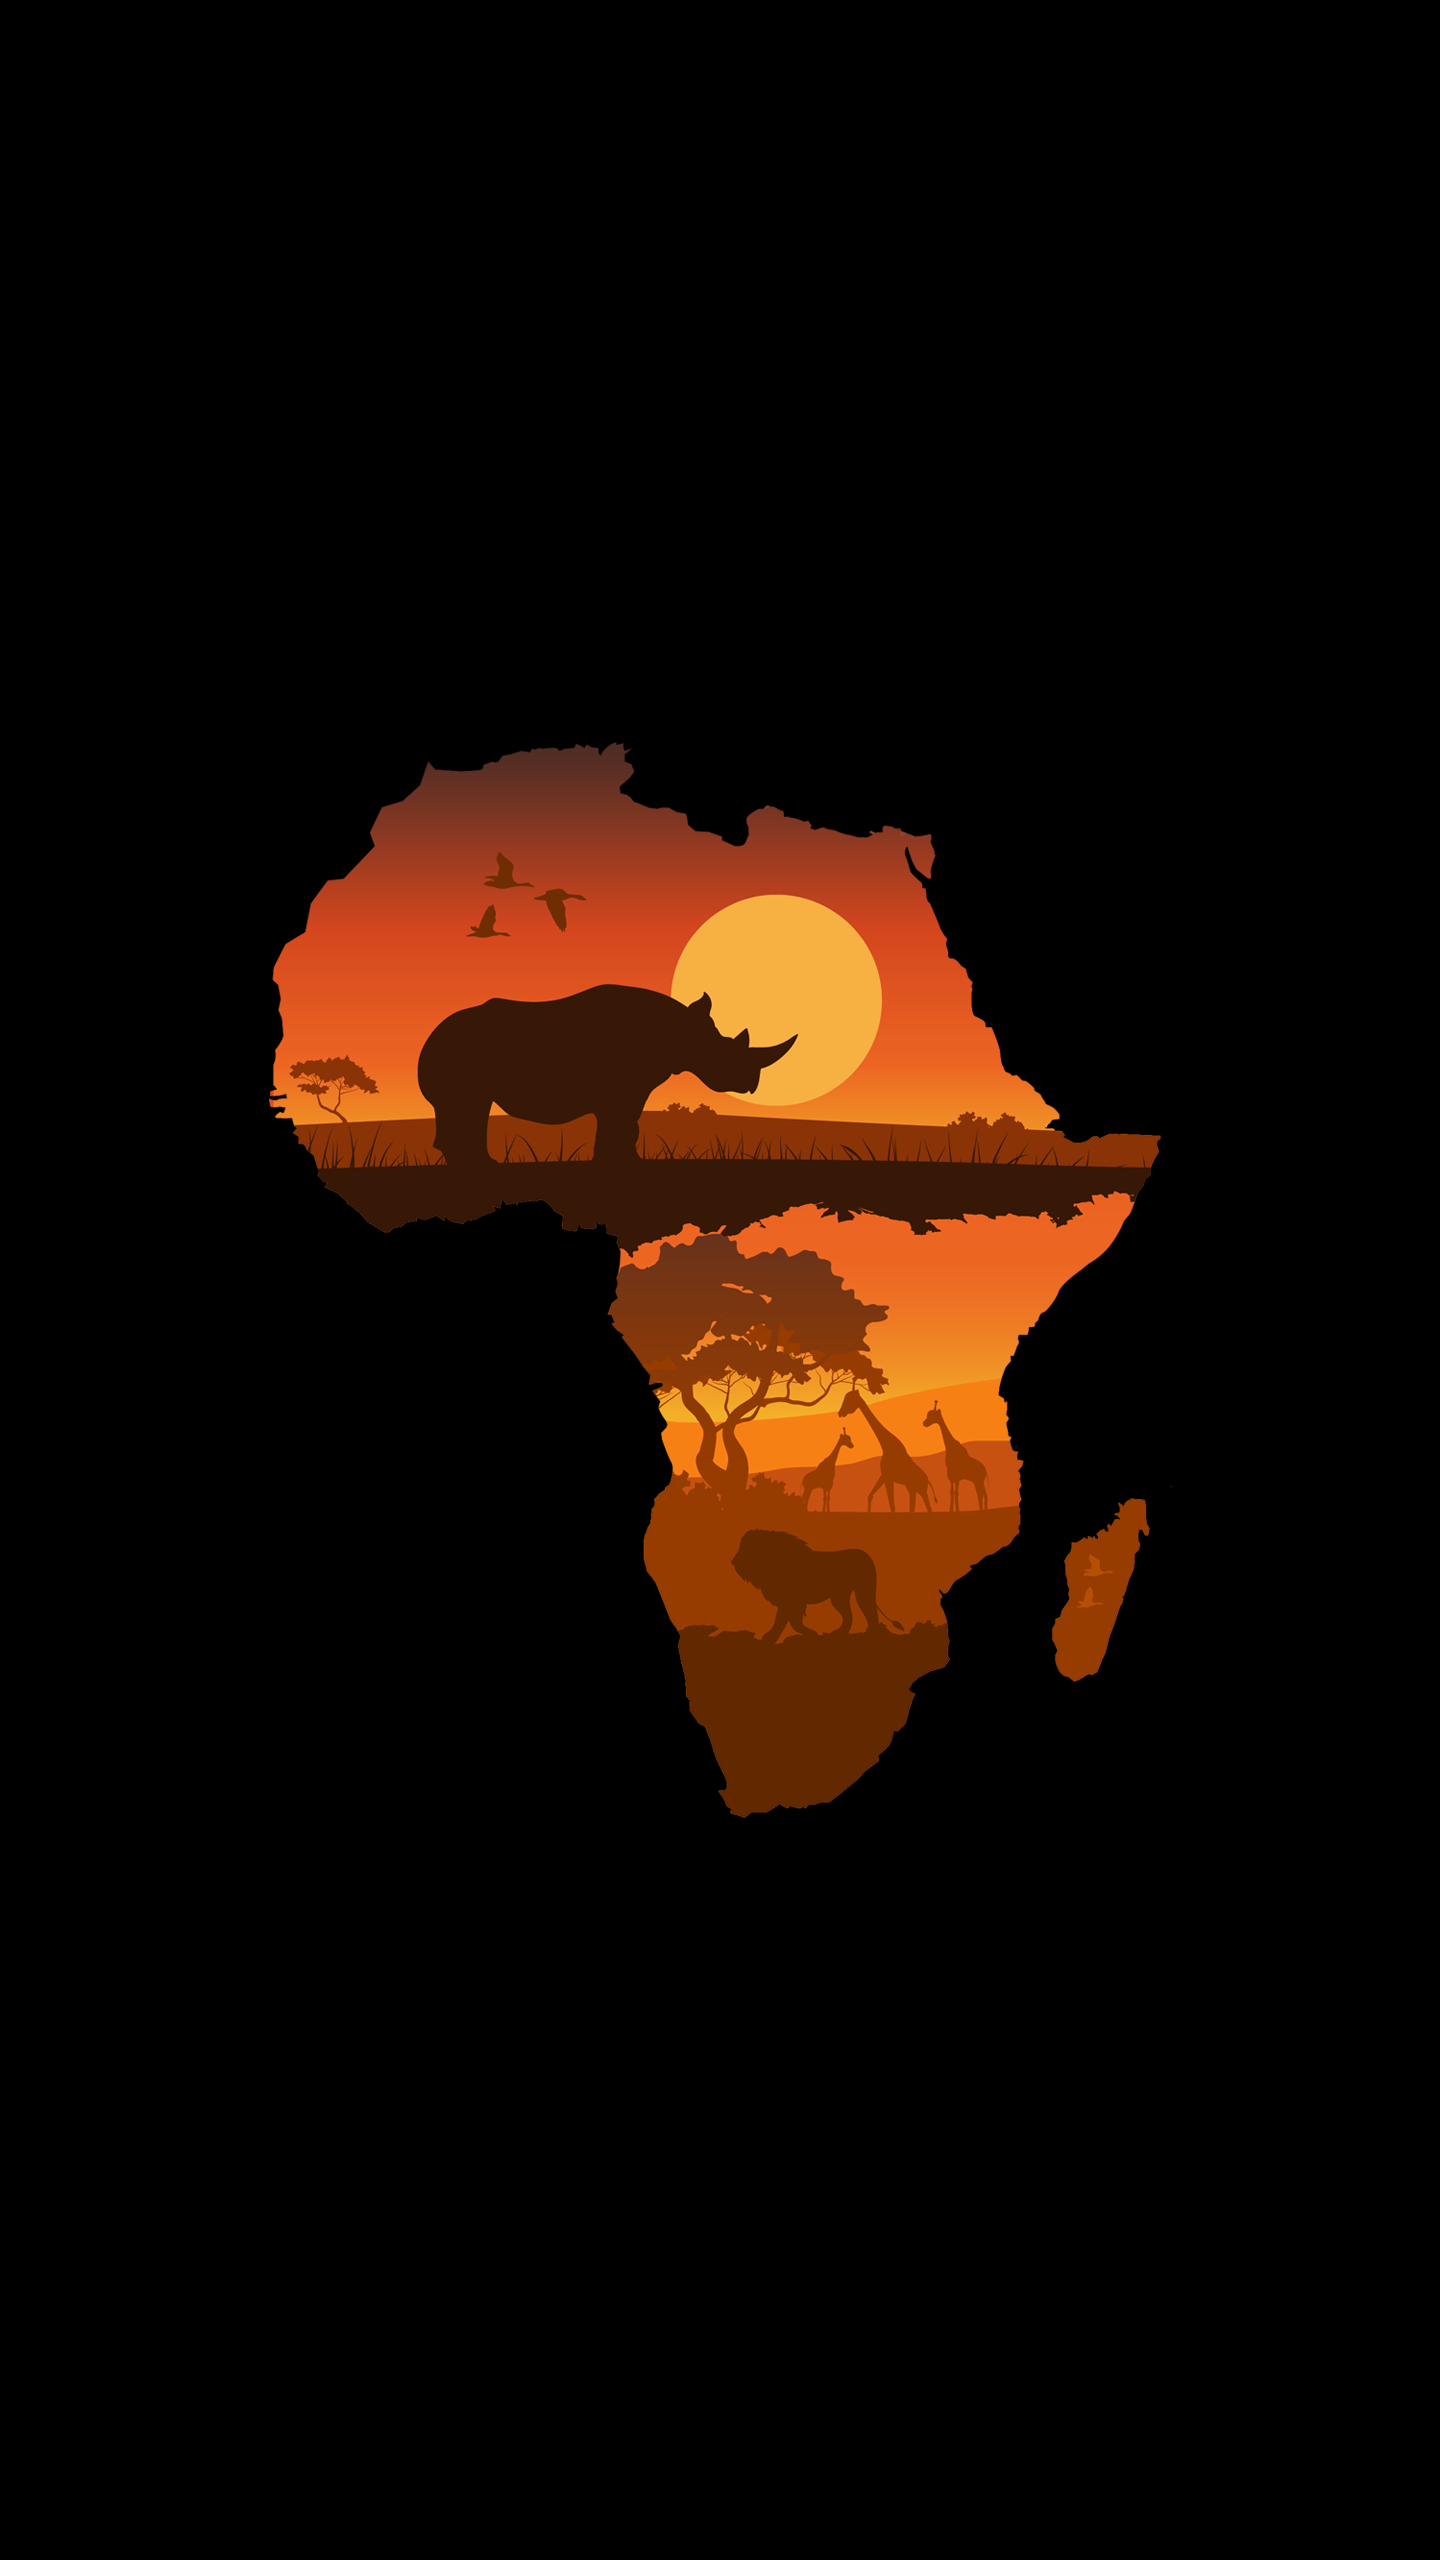 Island Safari. Wildlife wallpaper, Cool background wallpaper, Africa art